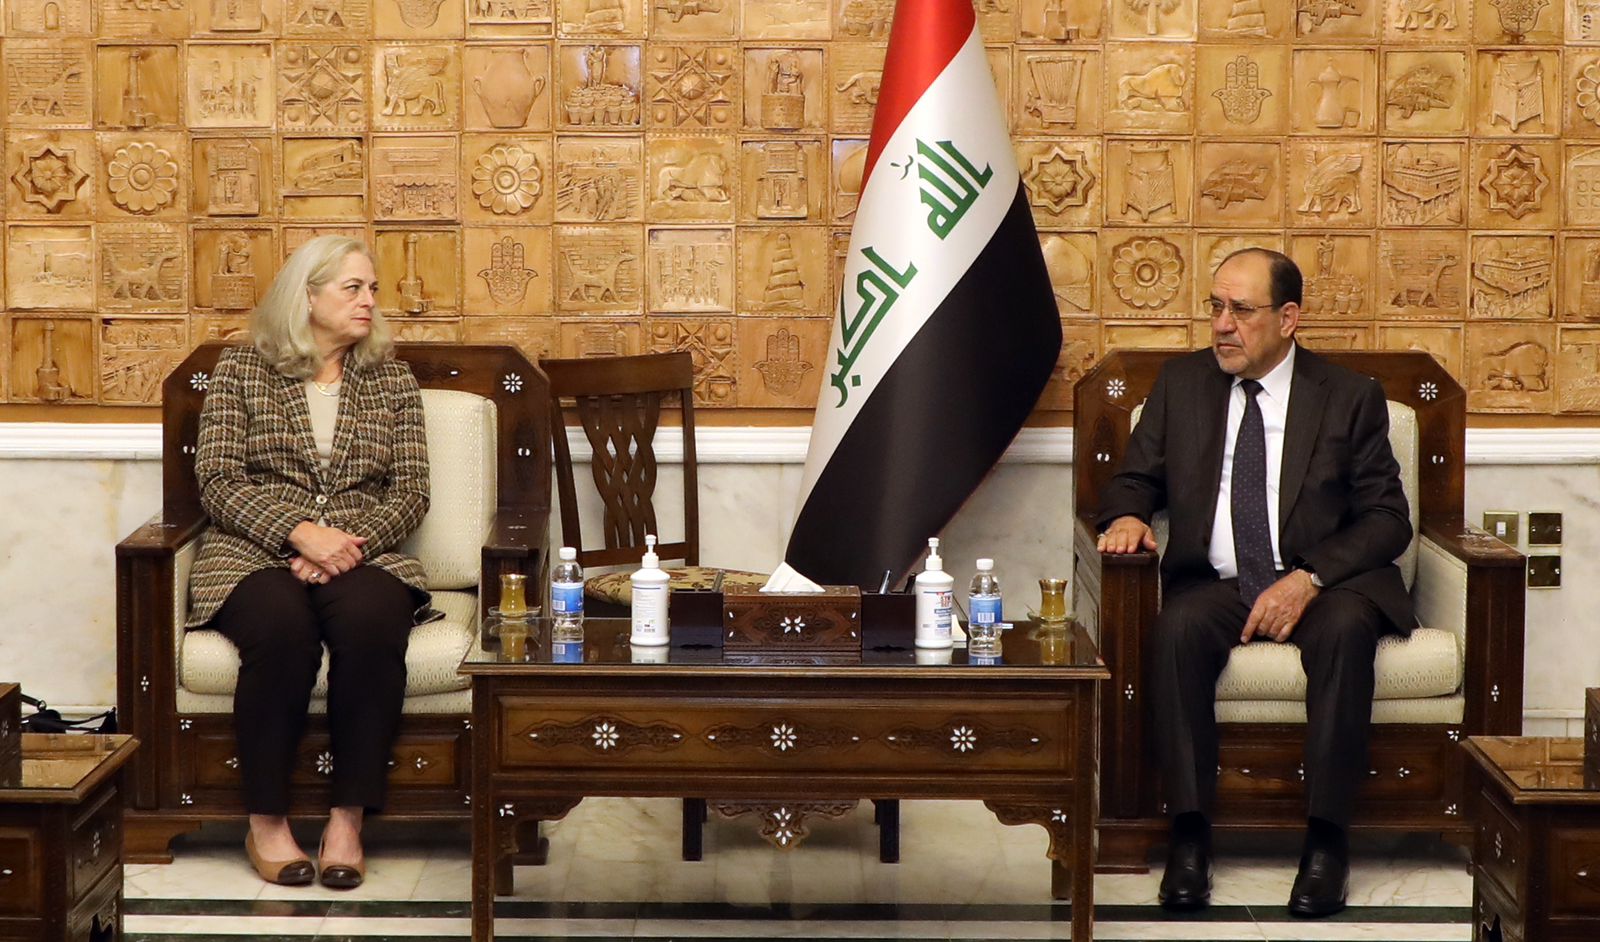 Al-Maliki meets the U.S. Ambassador, urges to ease regional tensions